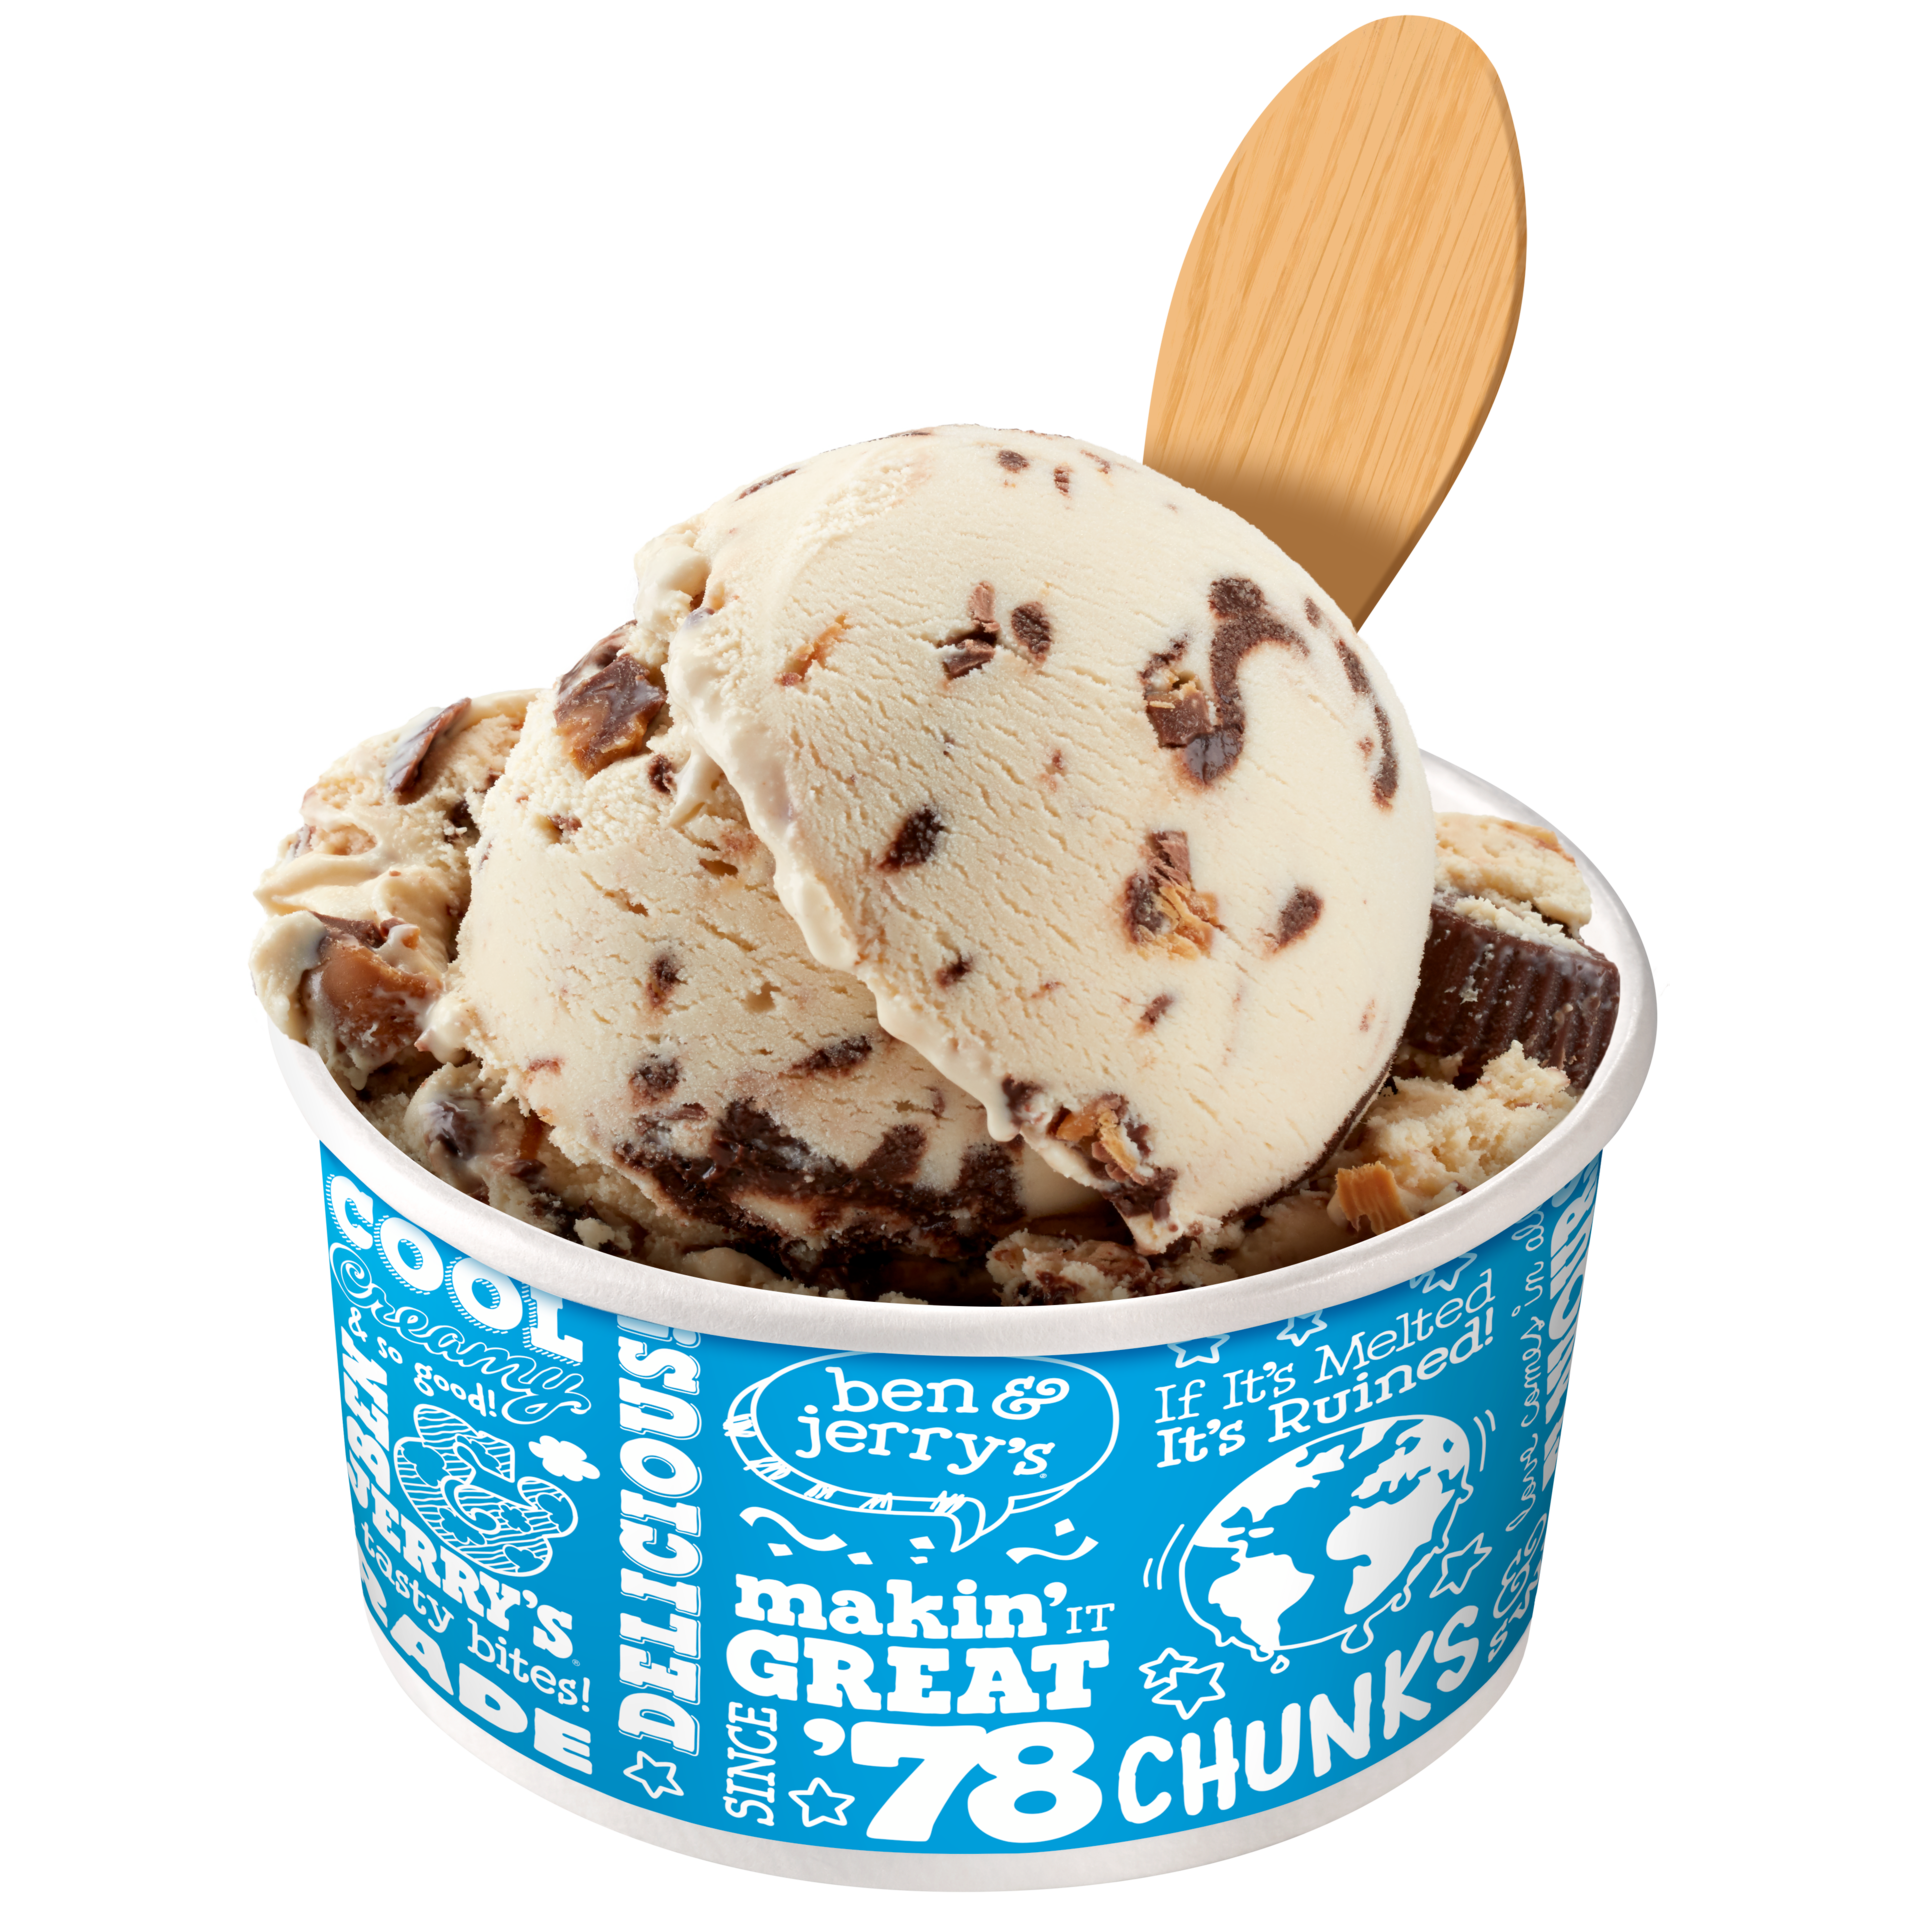 Peanut Butter Cup Sundae Original Ice Cream Scoop Shops